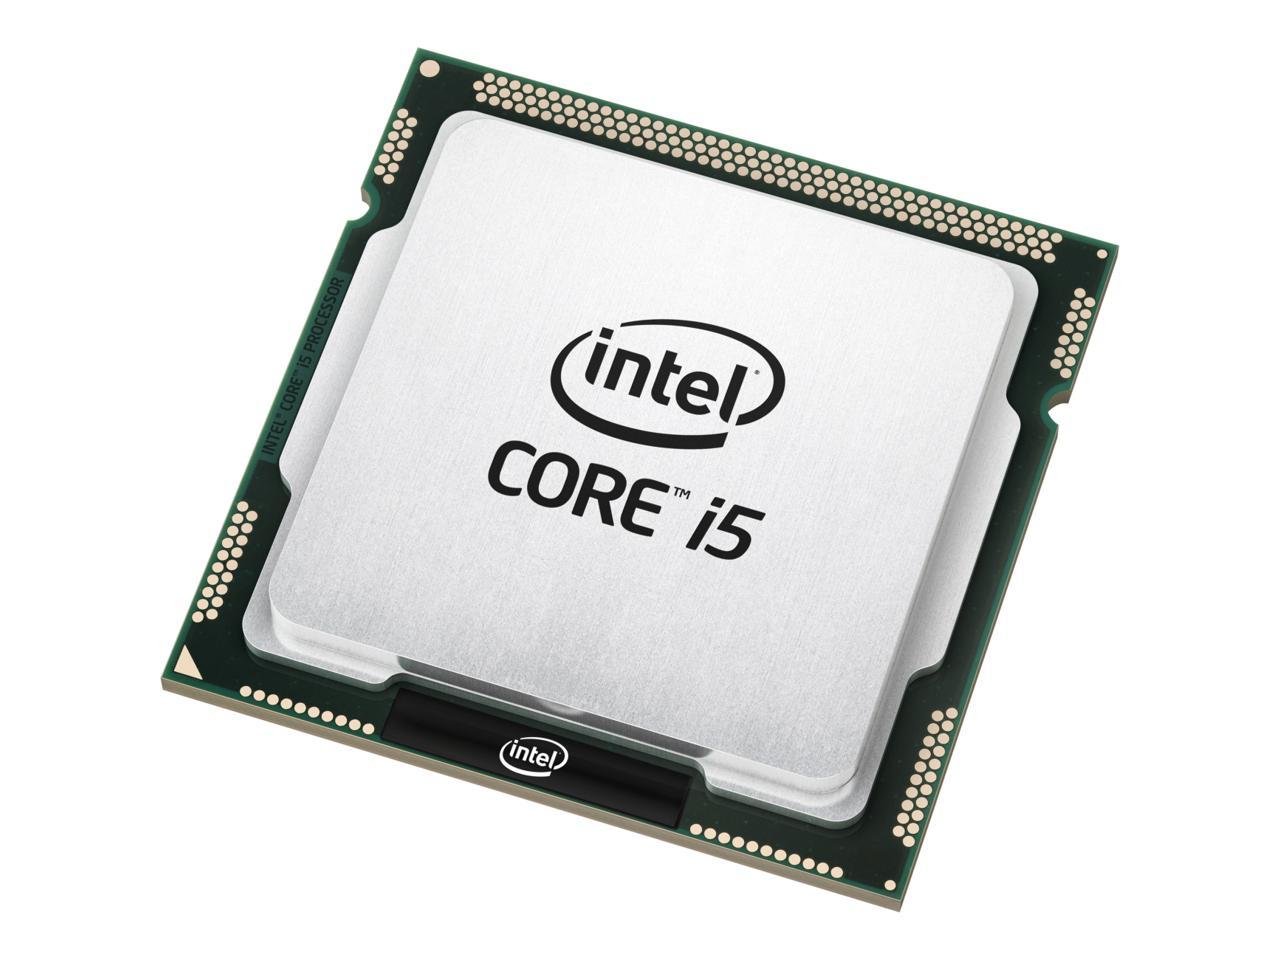 Intel Intel Core i5 4670 3.4GHz Quad Core SR14D Processor Haswell CPU 